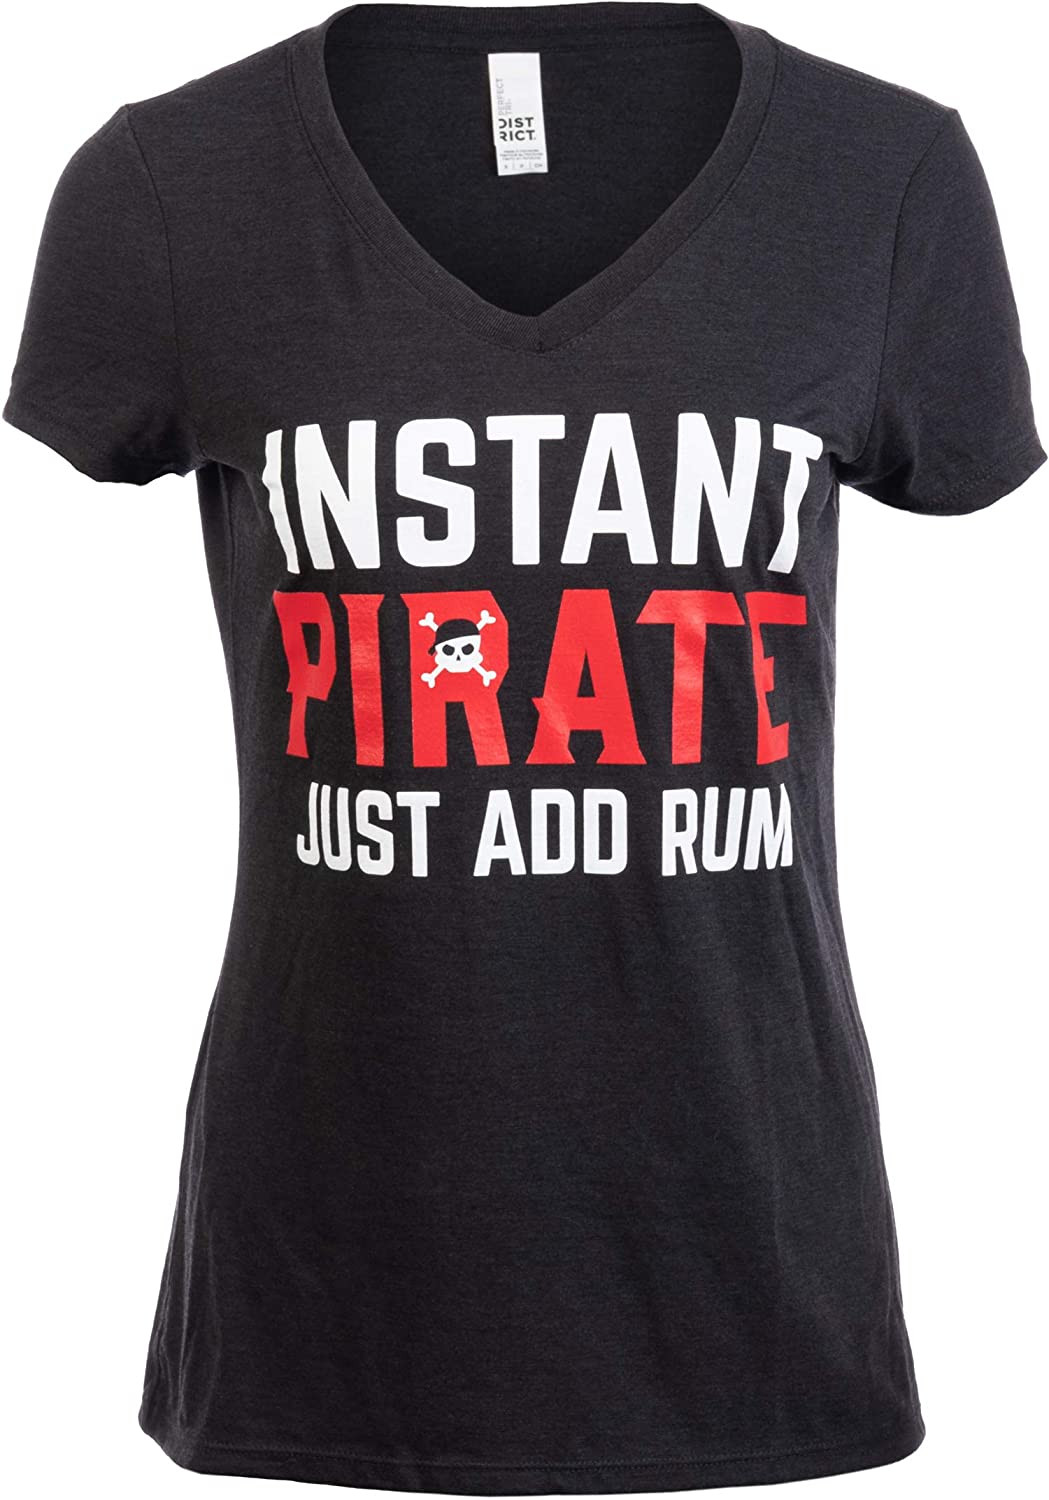 Instant Pirate Just Add Rum 5938